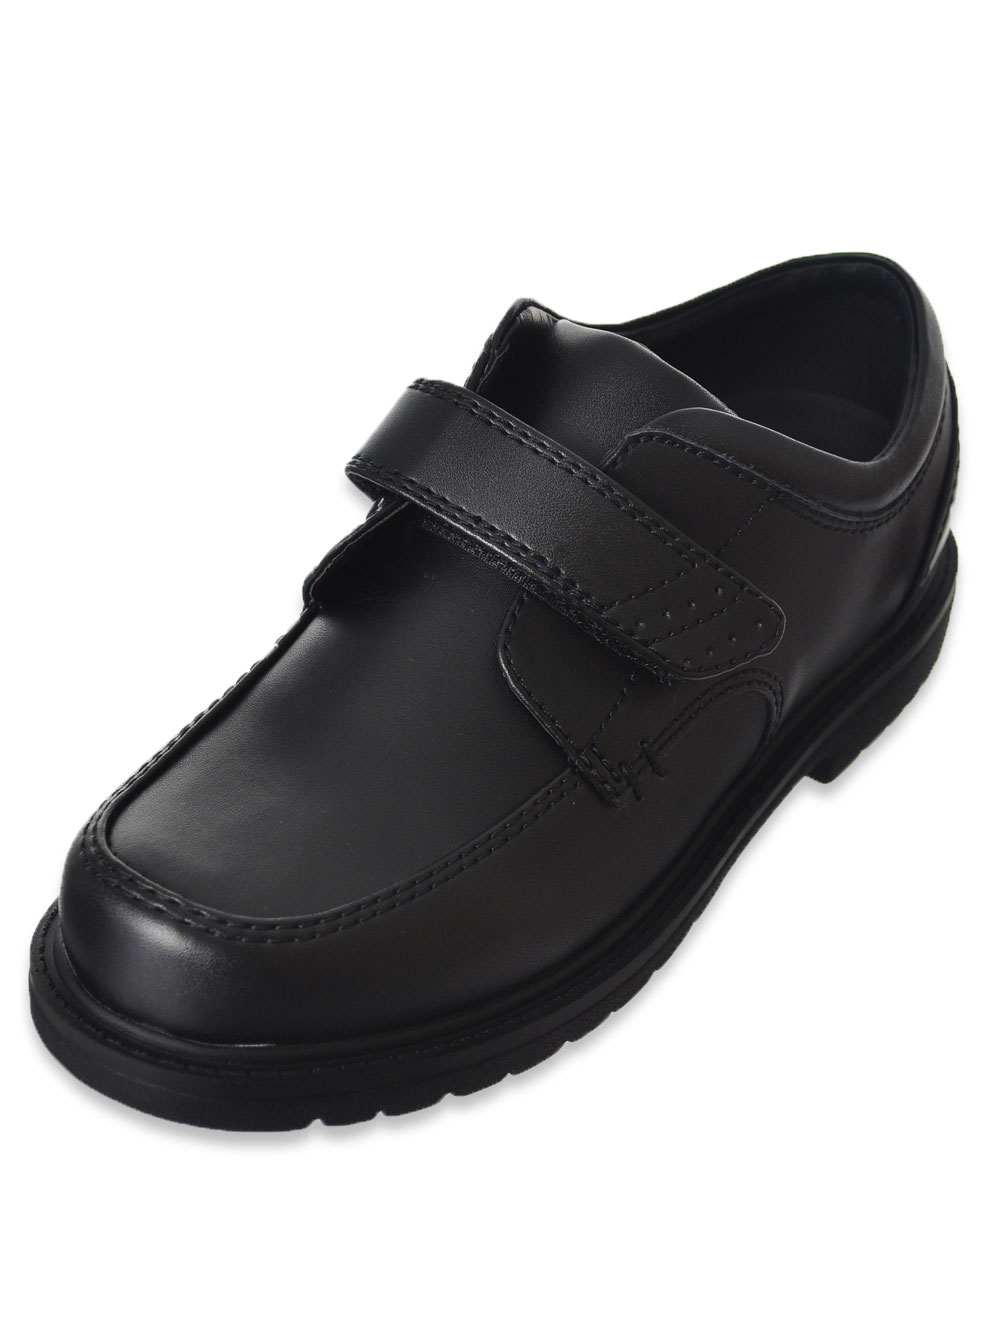 Academie Gear Boys' School Shoes (Sizes 